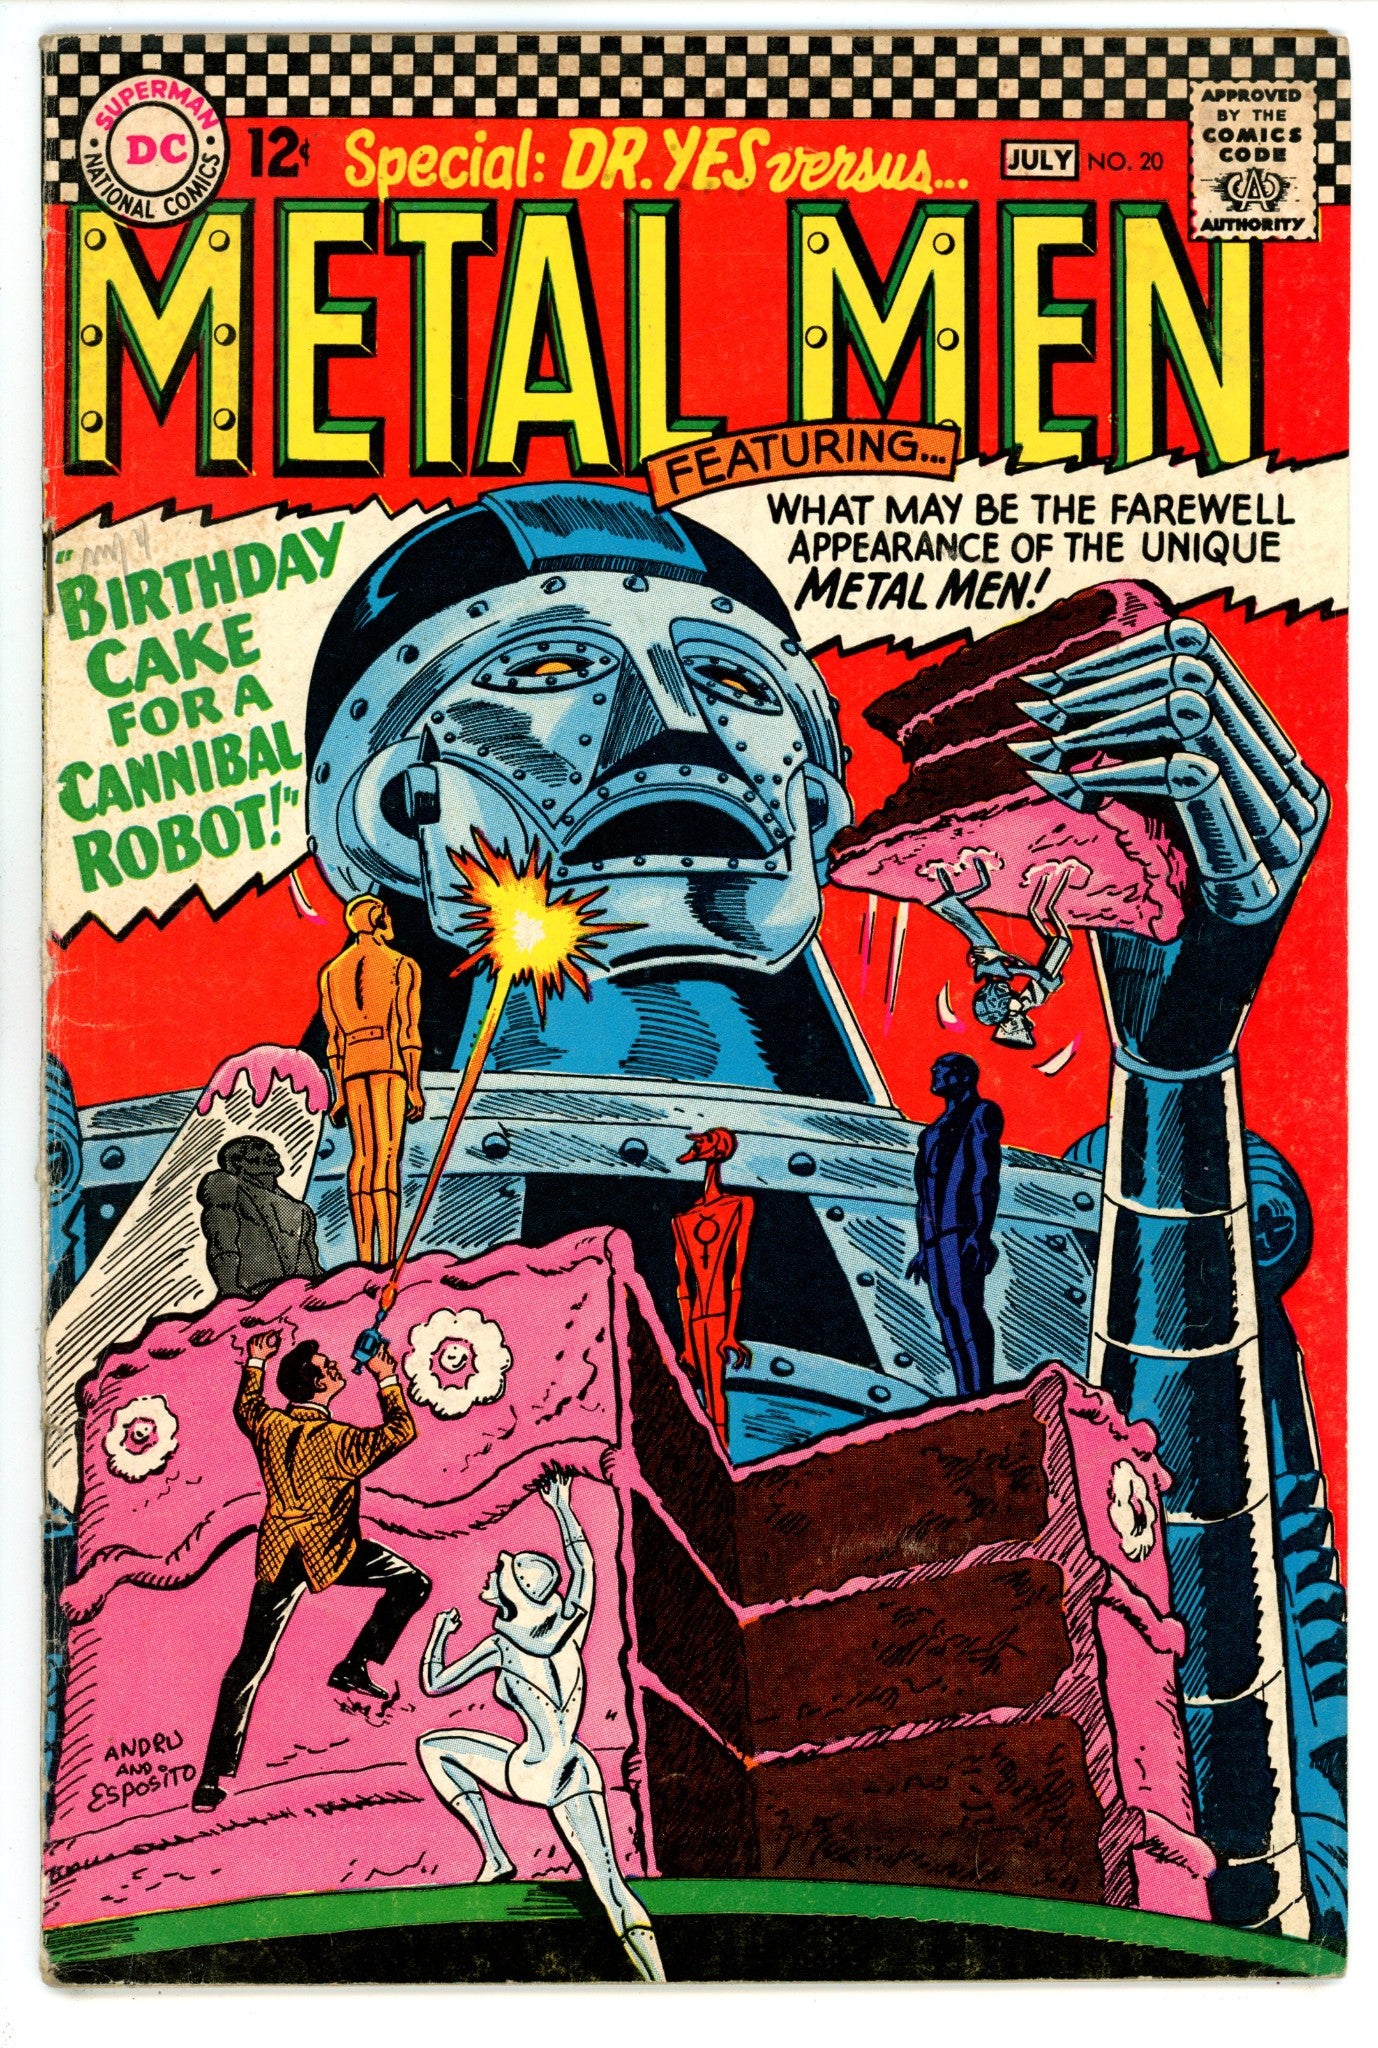 Metal Men Vol 1 20 VG (4.0) (1966) 